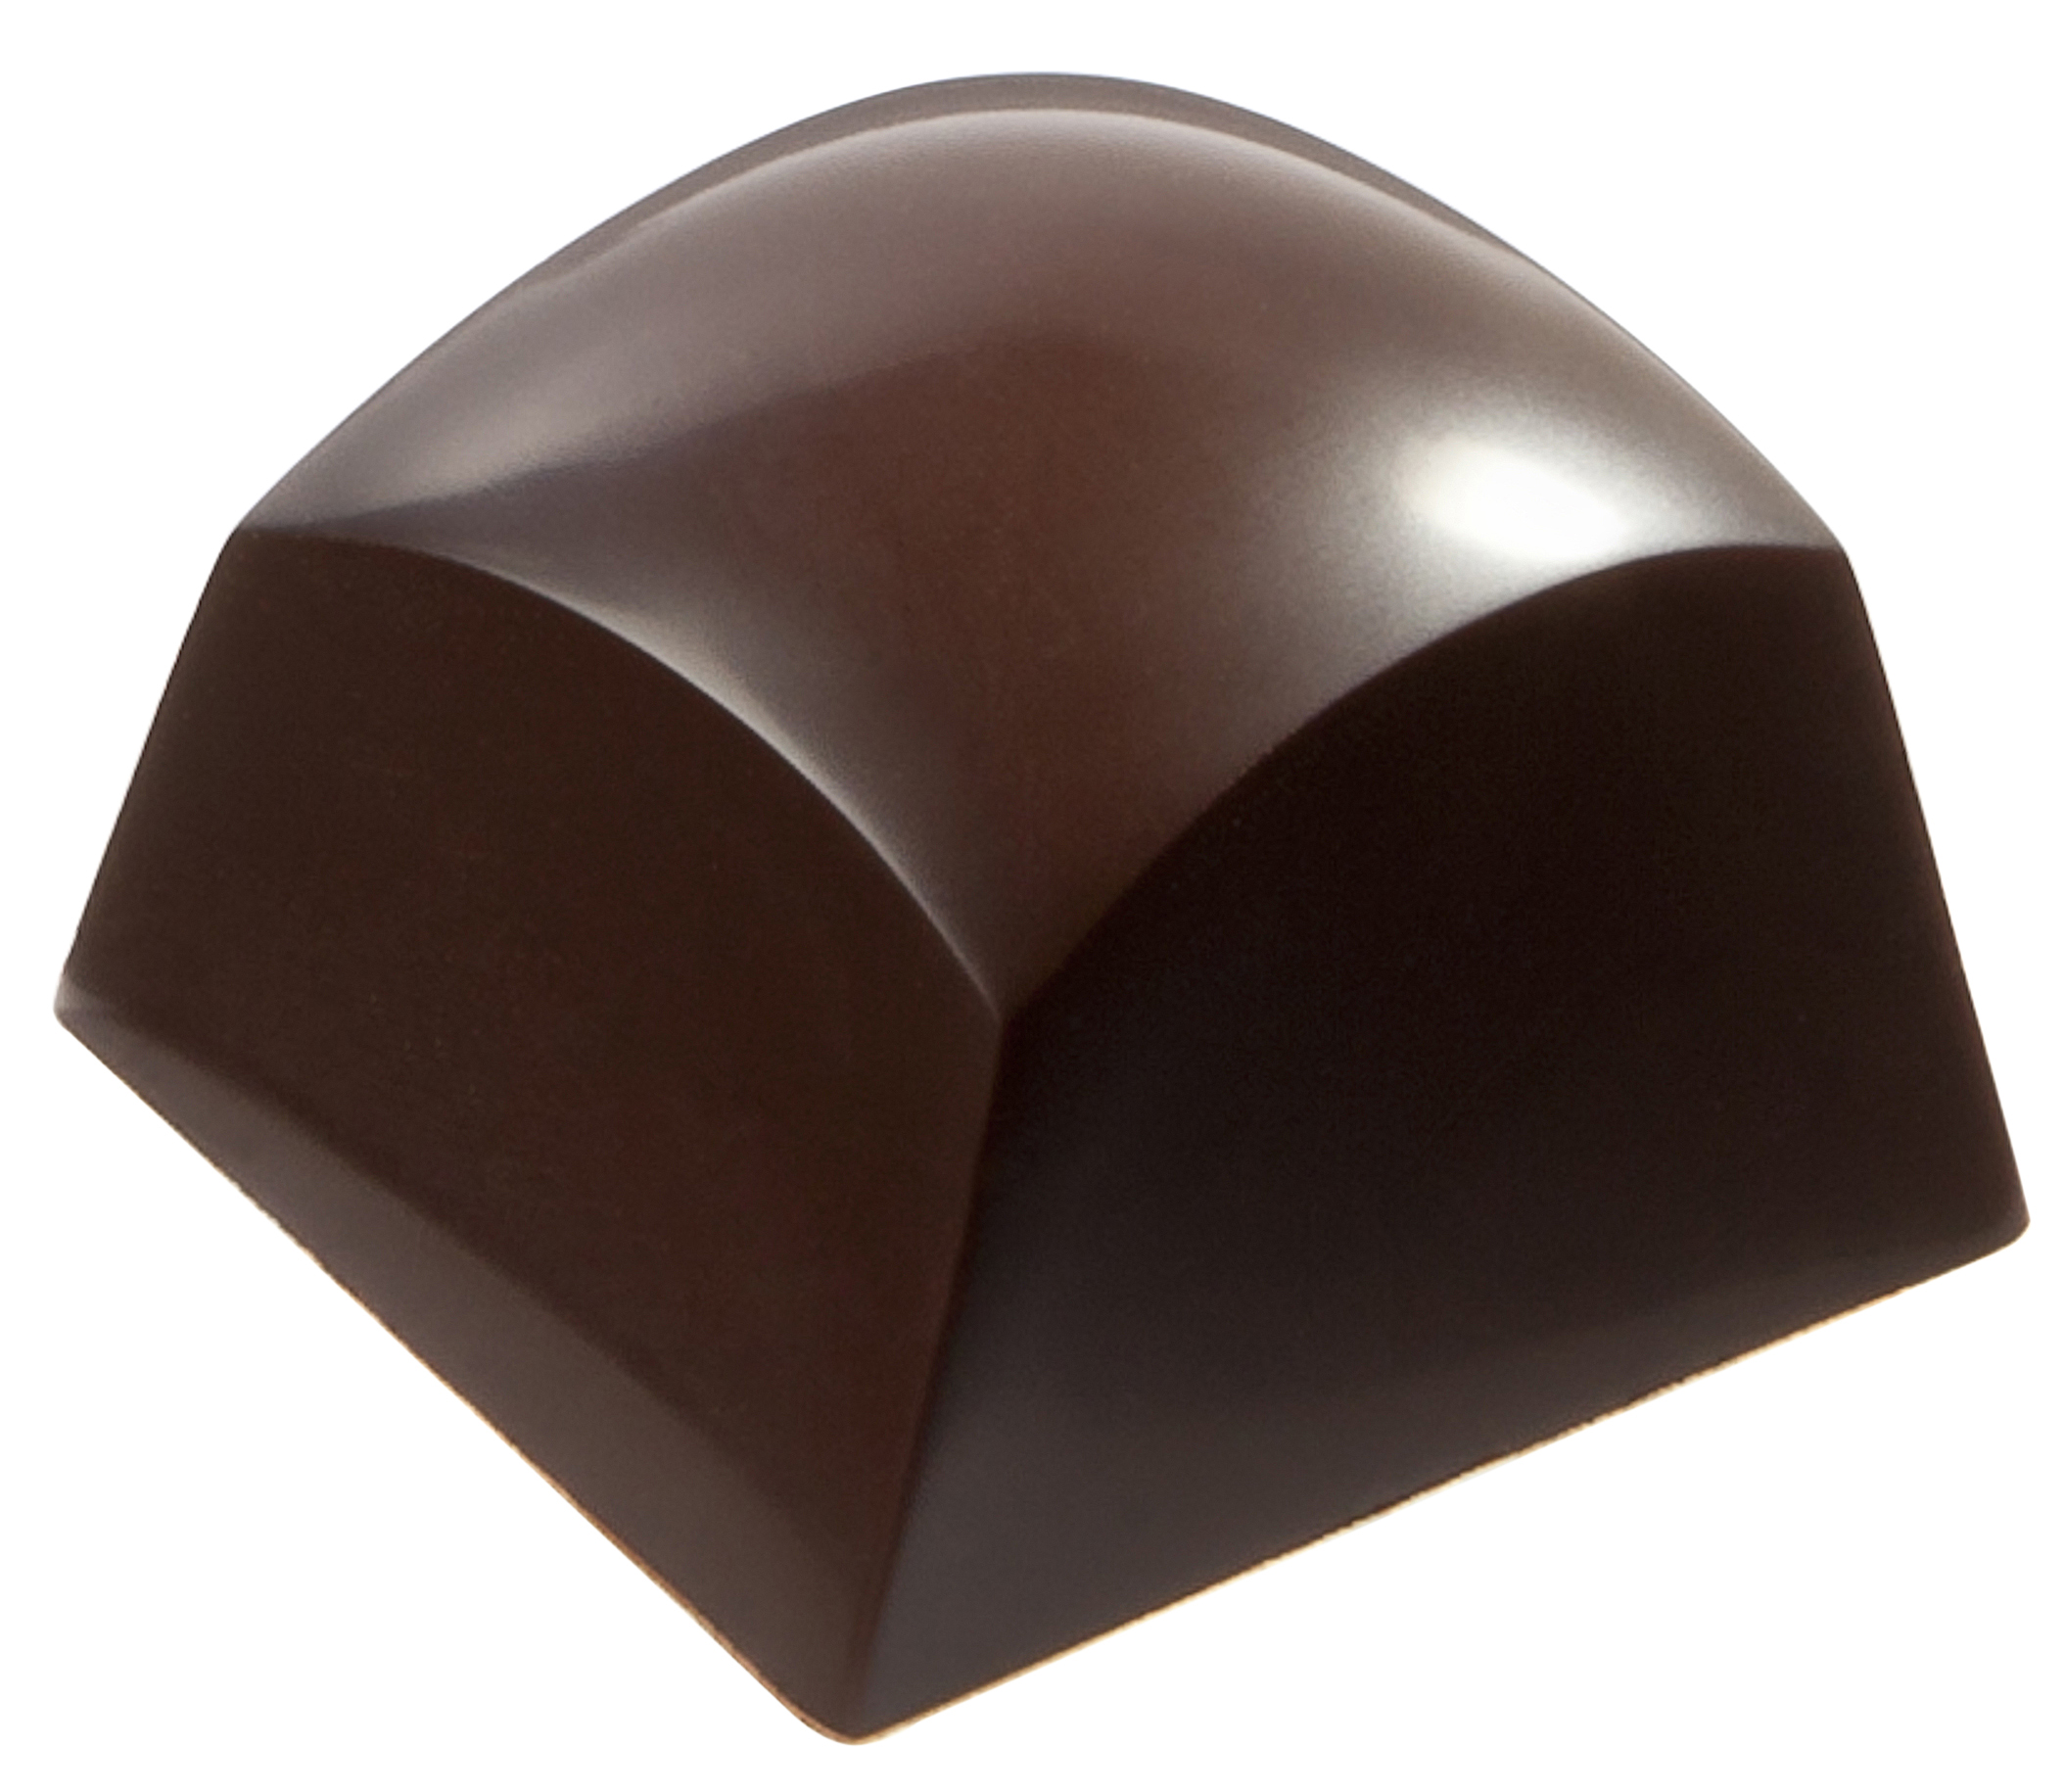 Billede af Professionel chokoladeform i polycarbonat - Round cube - Ruth Hinks CW1753